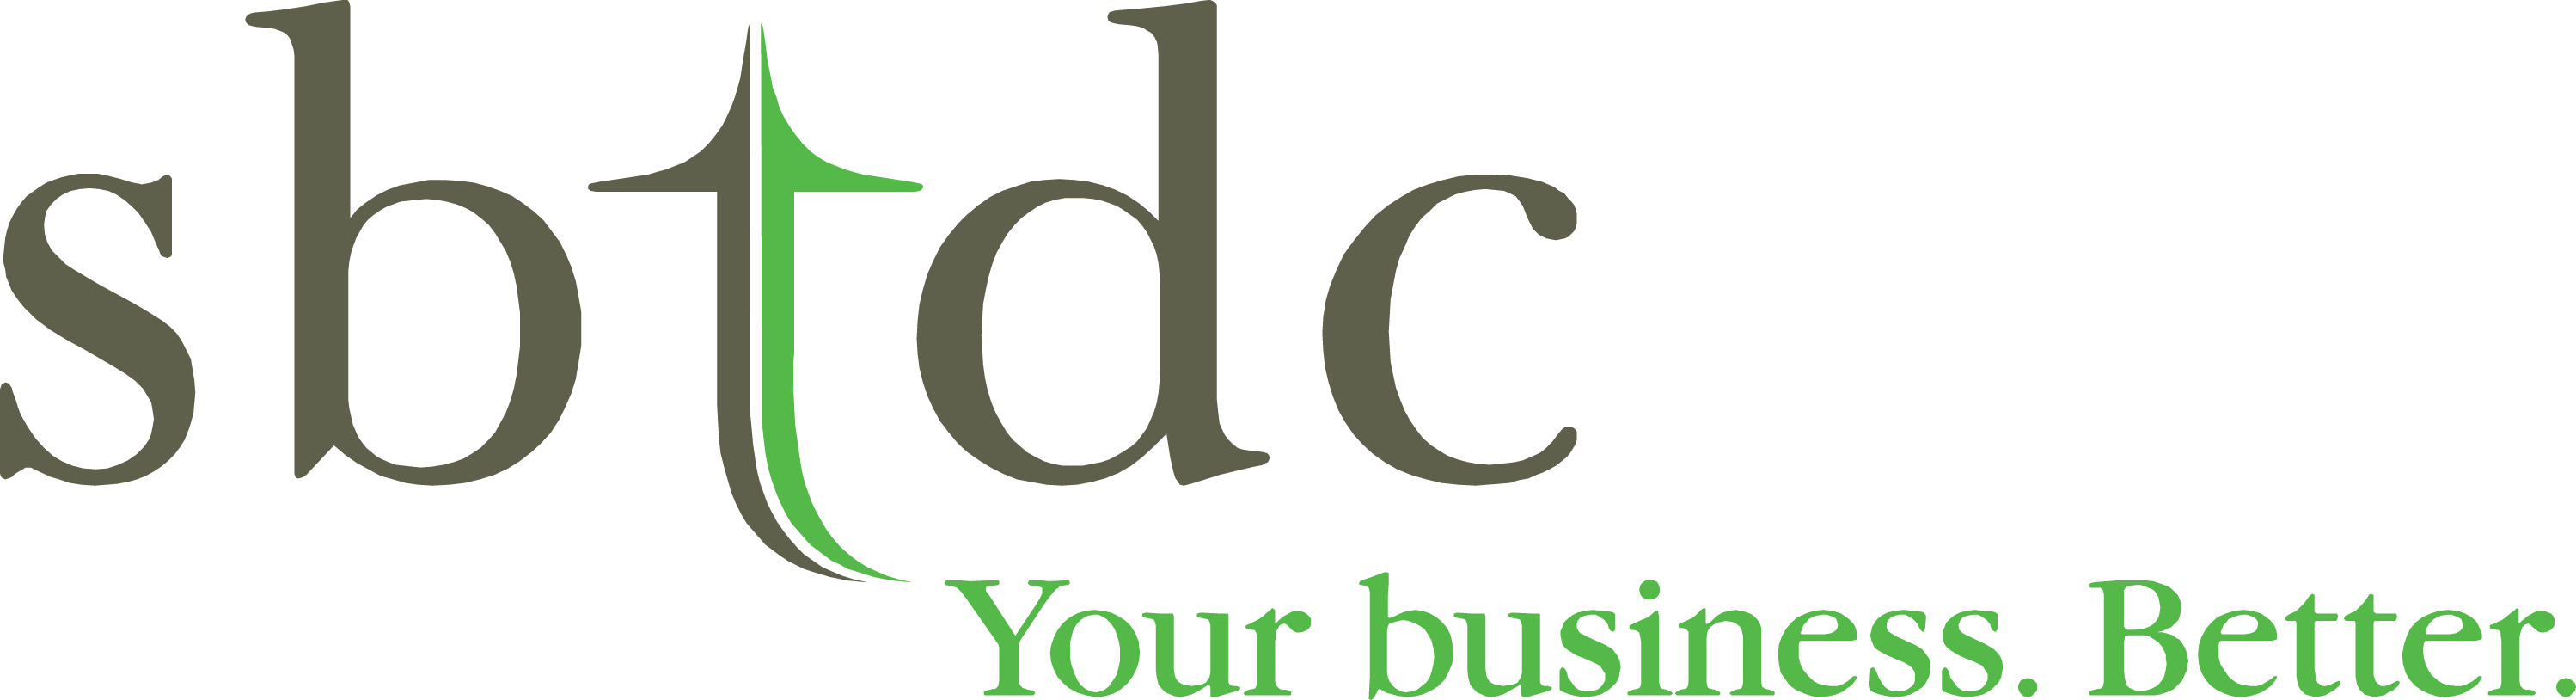 sbtdc-logo